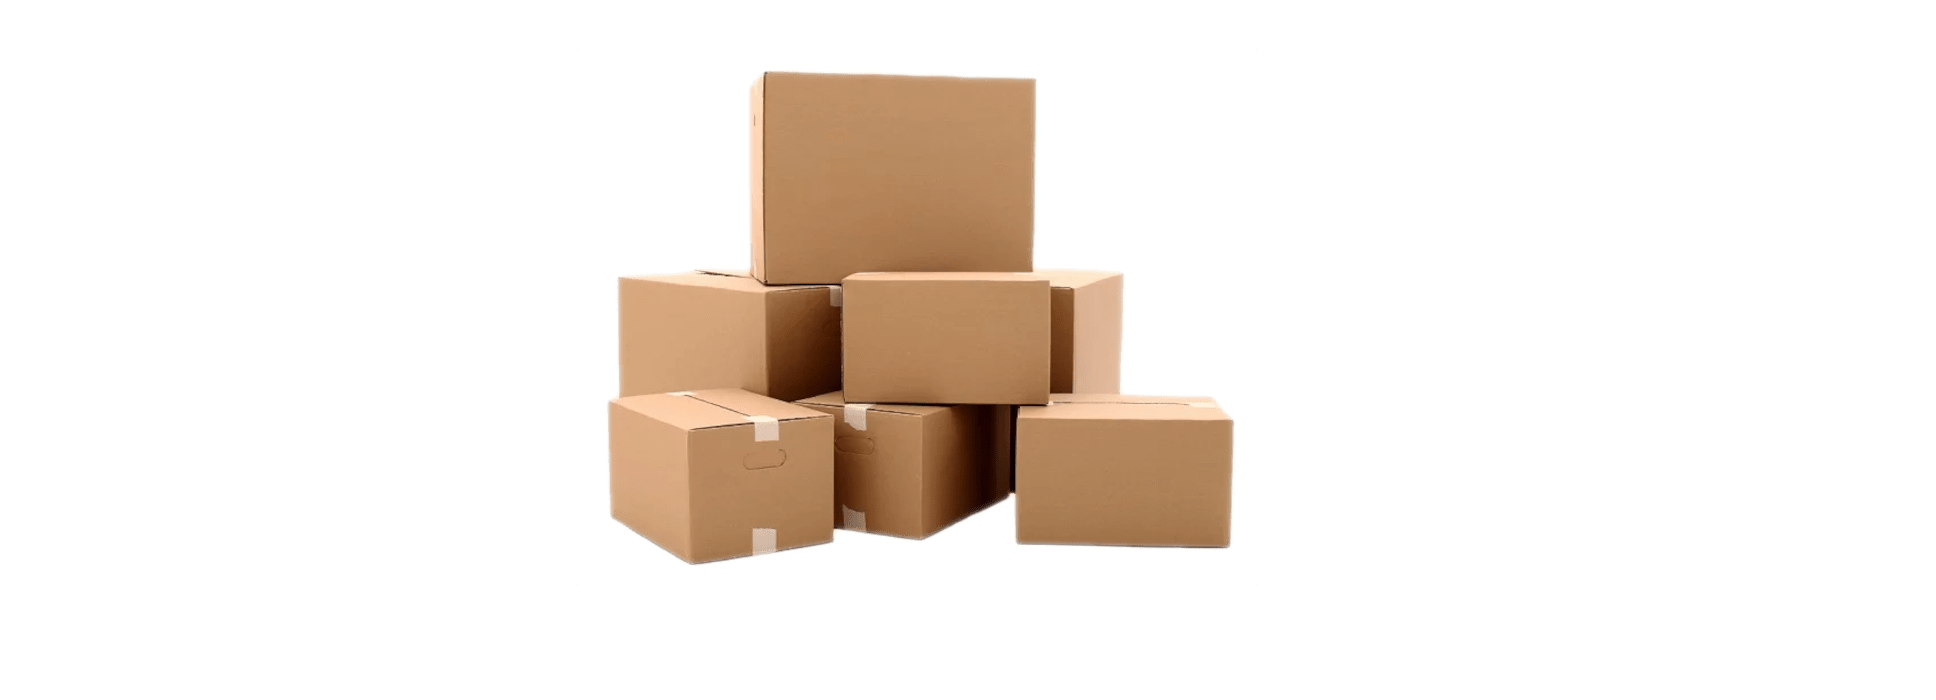 bristol car and truck rental moving box